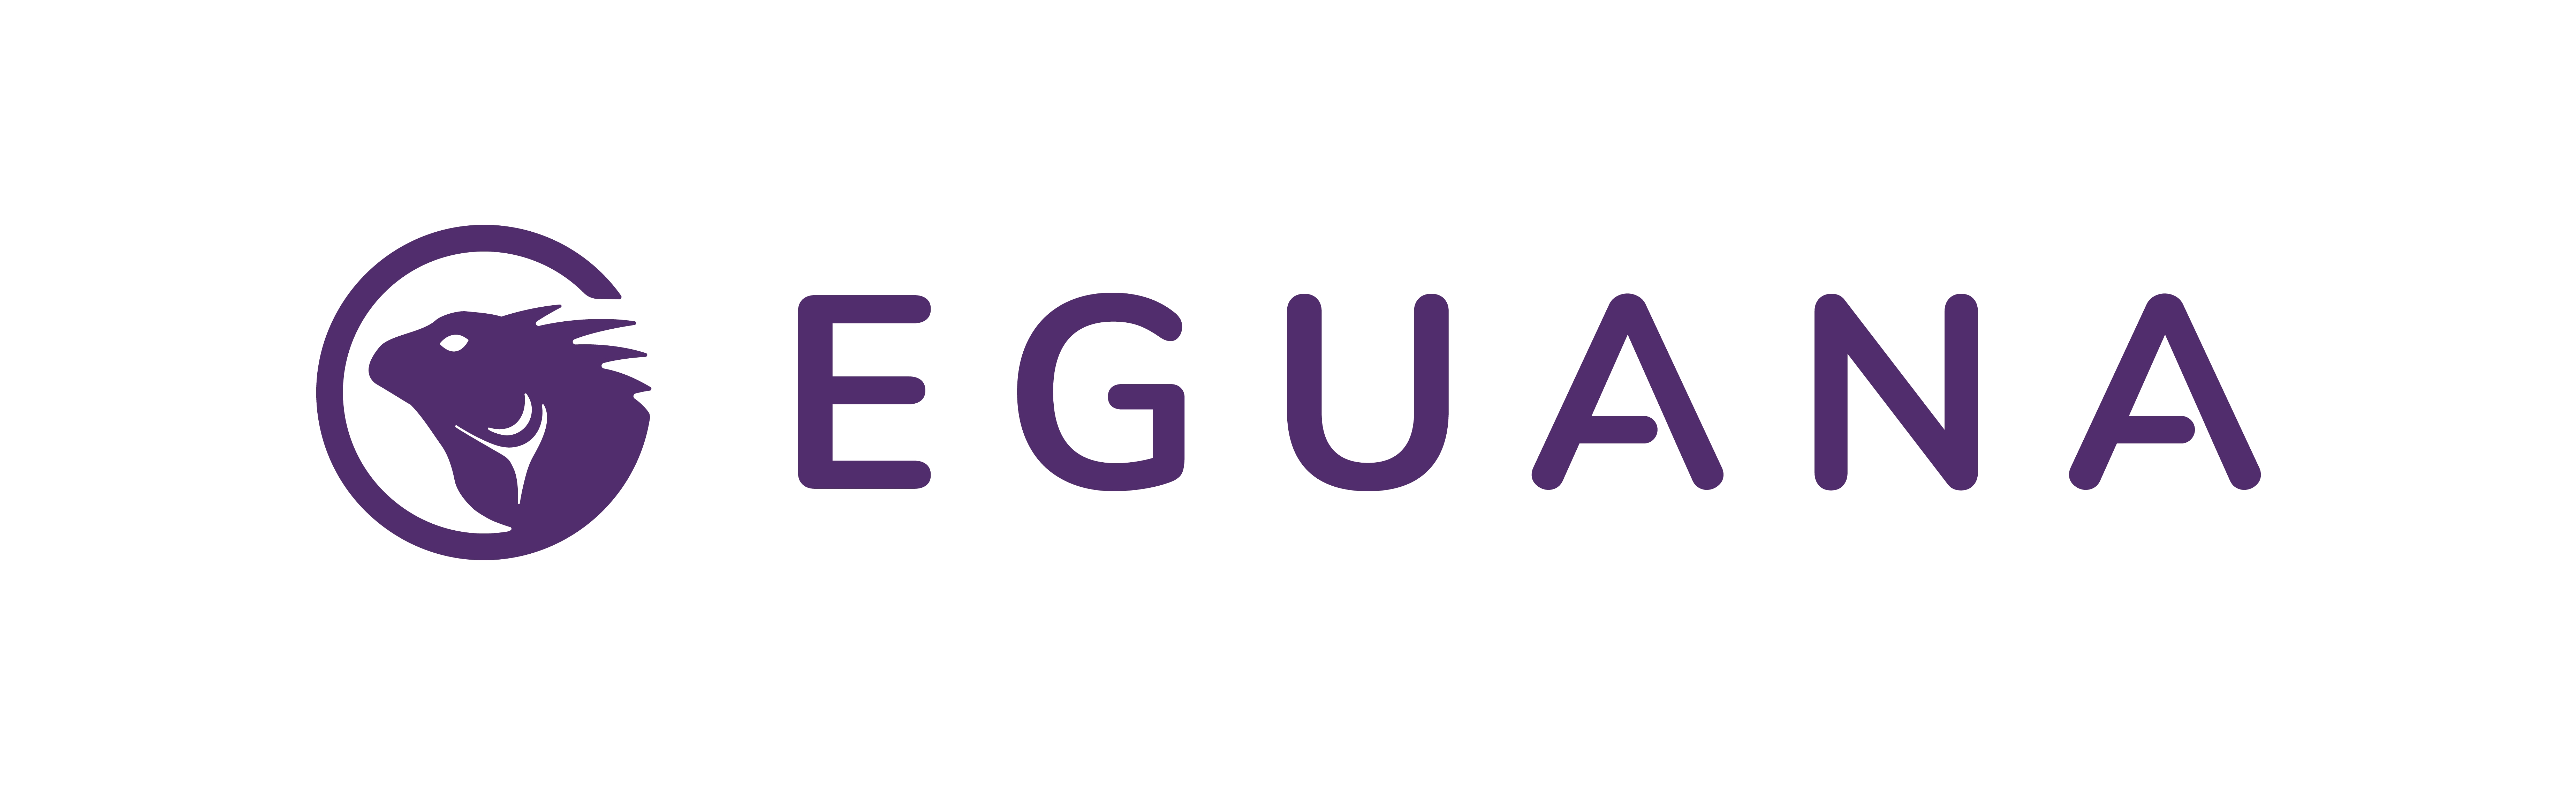 Eguana logo